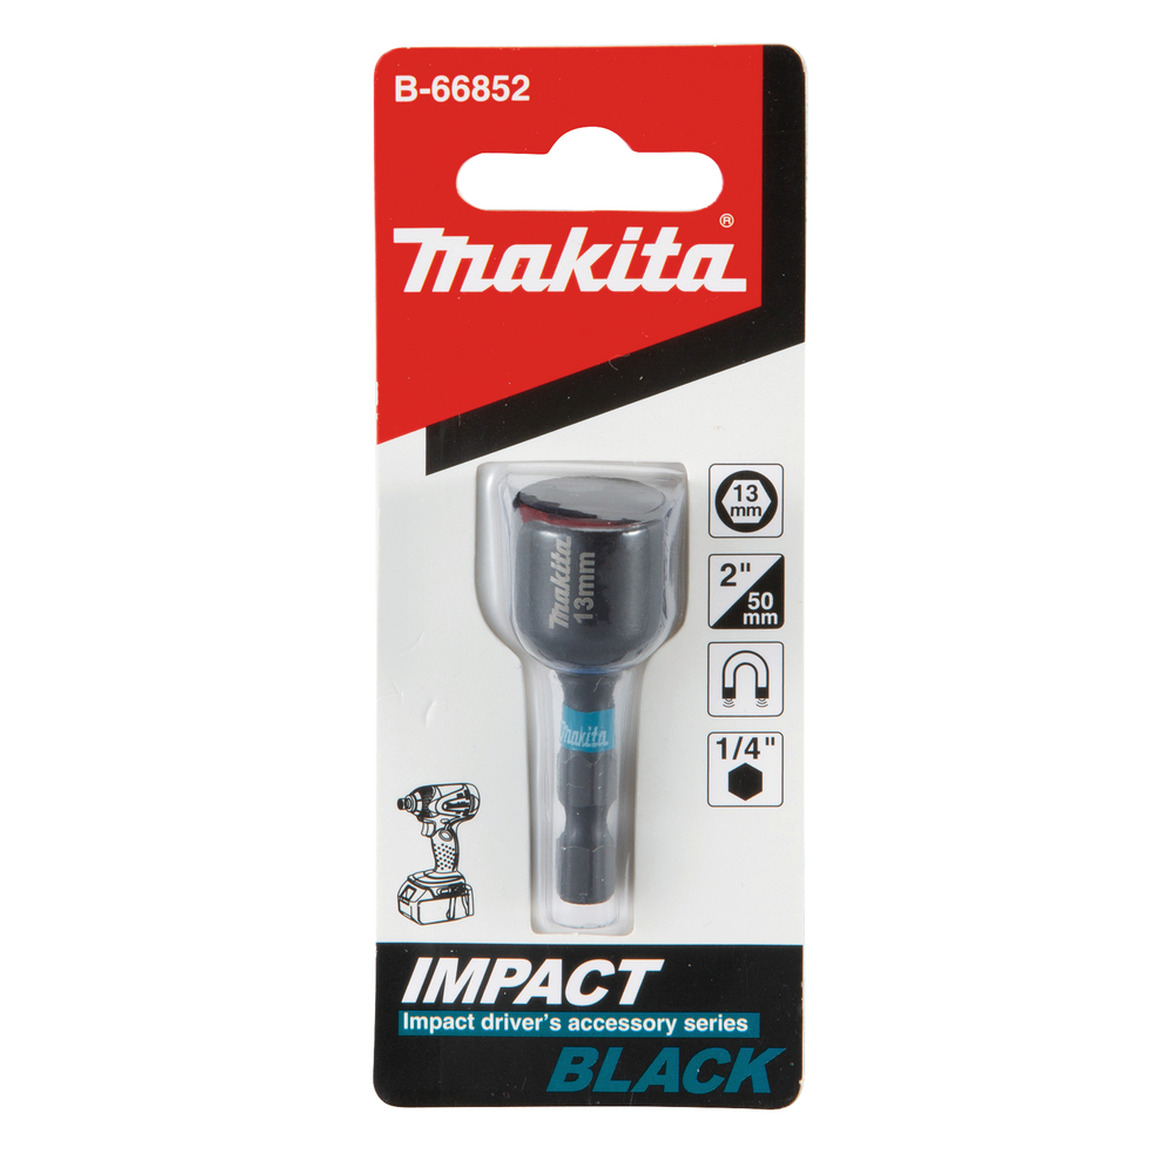 Торцовая магнитная головка Makita Impact Black 13*50 B-66852